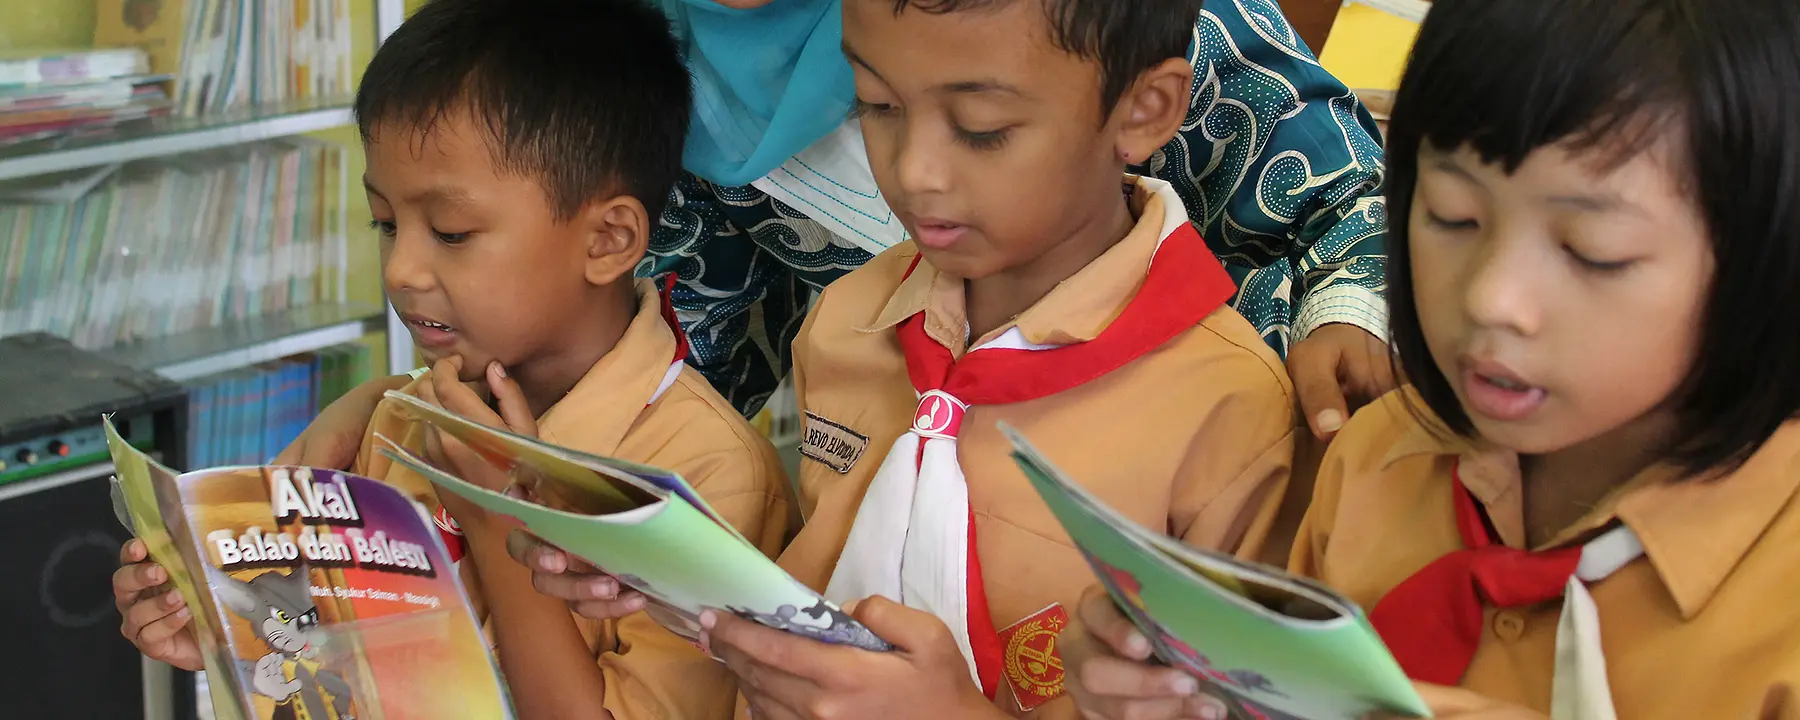 Children reading books in Indonesia